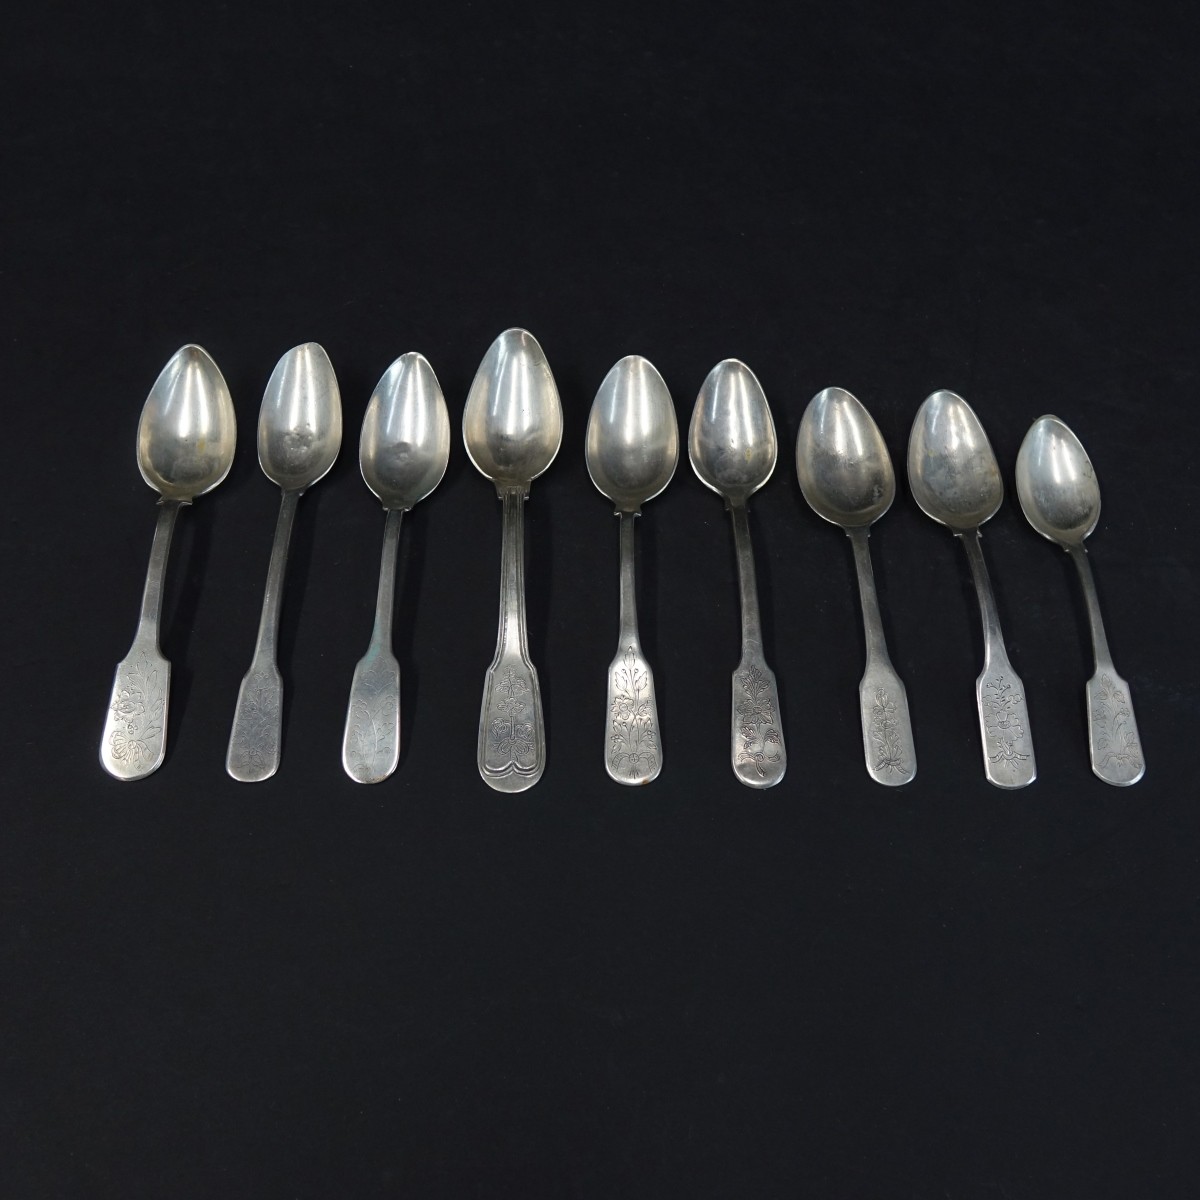 European Silver Spoons